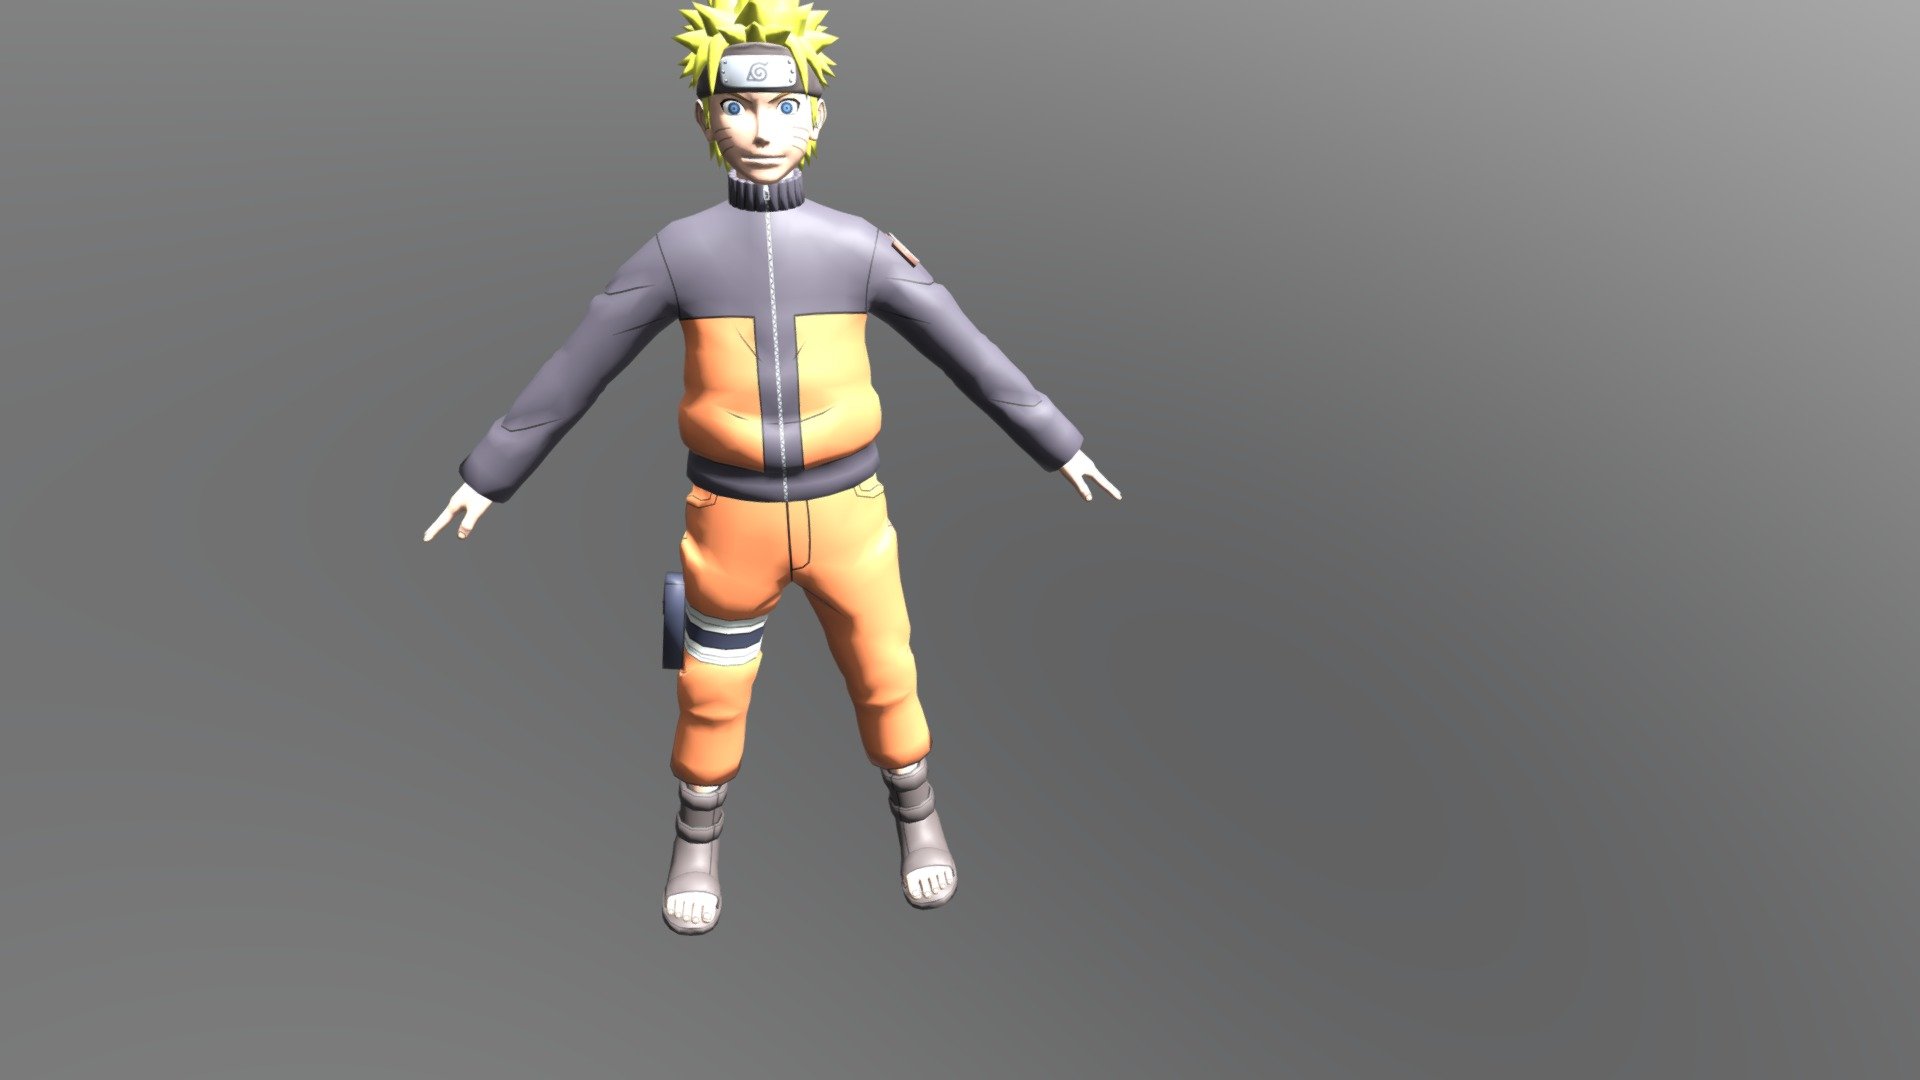 Random idea - Reanimate Naruto anime into modern 3D video game